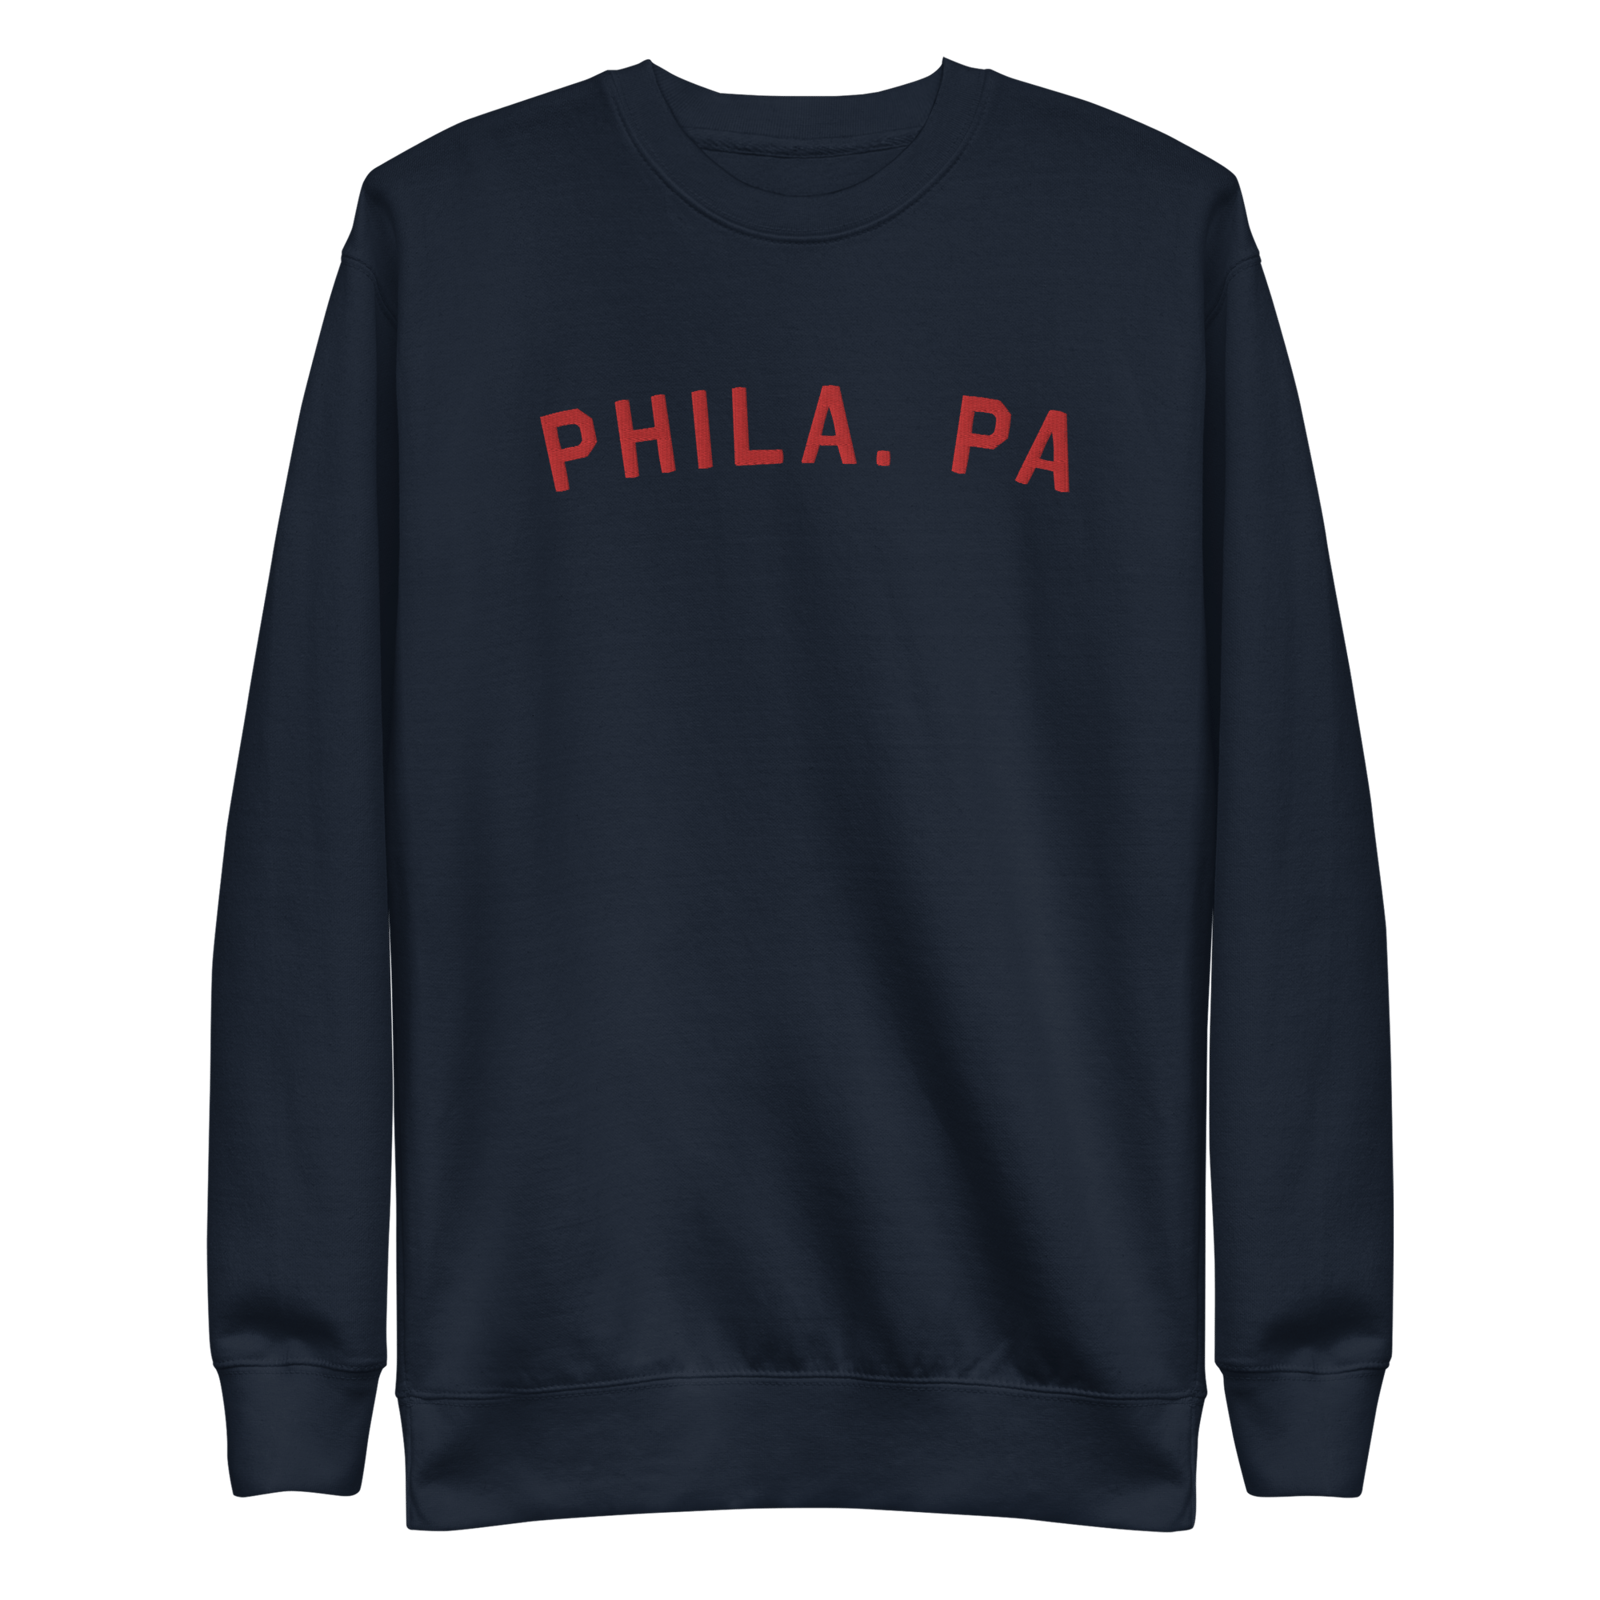 Phila. PA Heather Grey Embroidered Sweatshirt